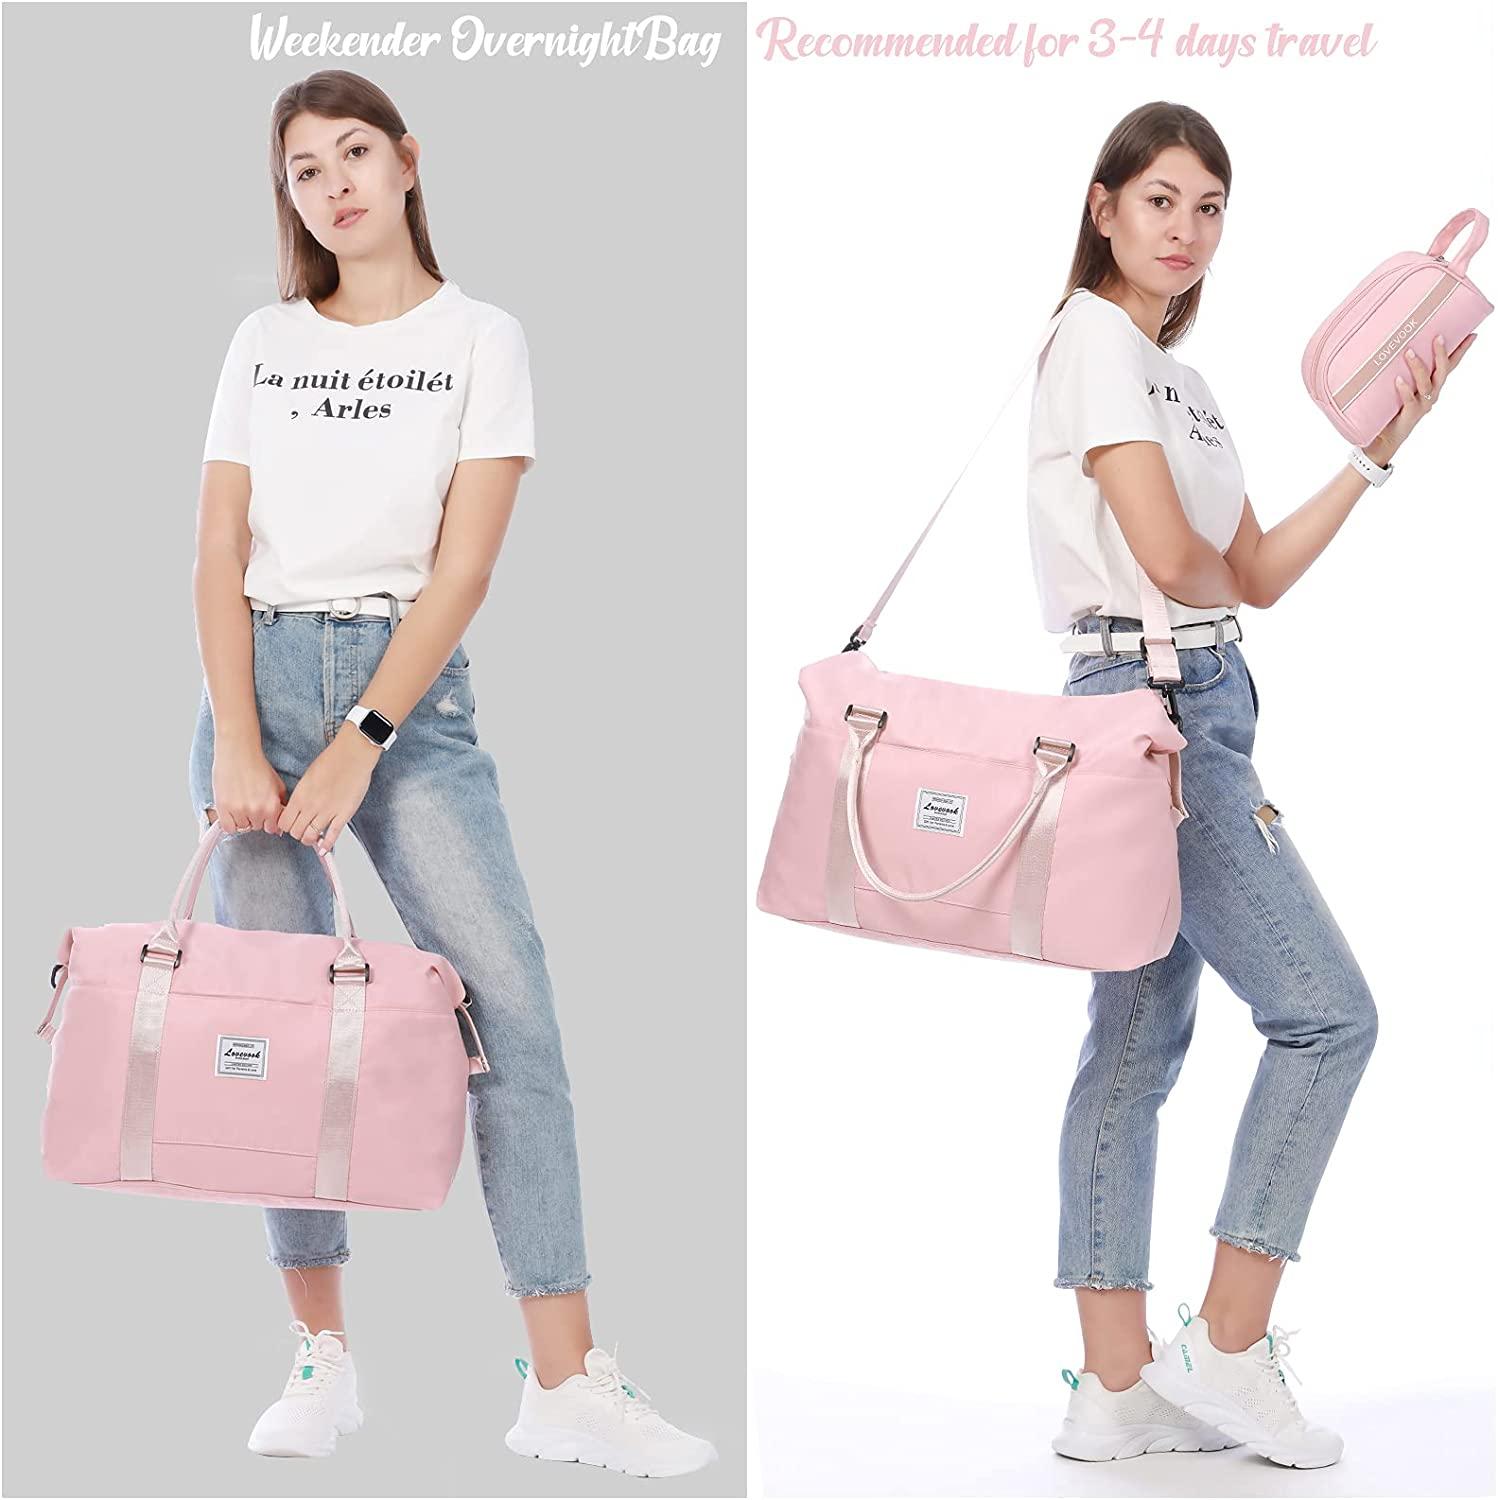 Weekender Bag for Women Cute Travel Tote Bag Gym Duffel Bag with